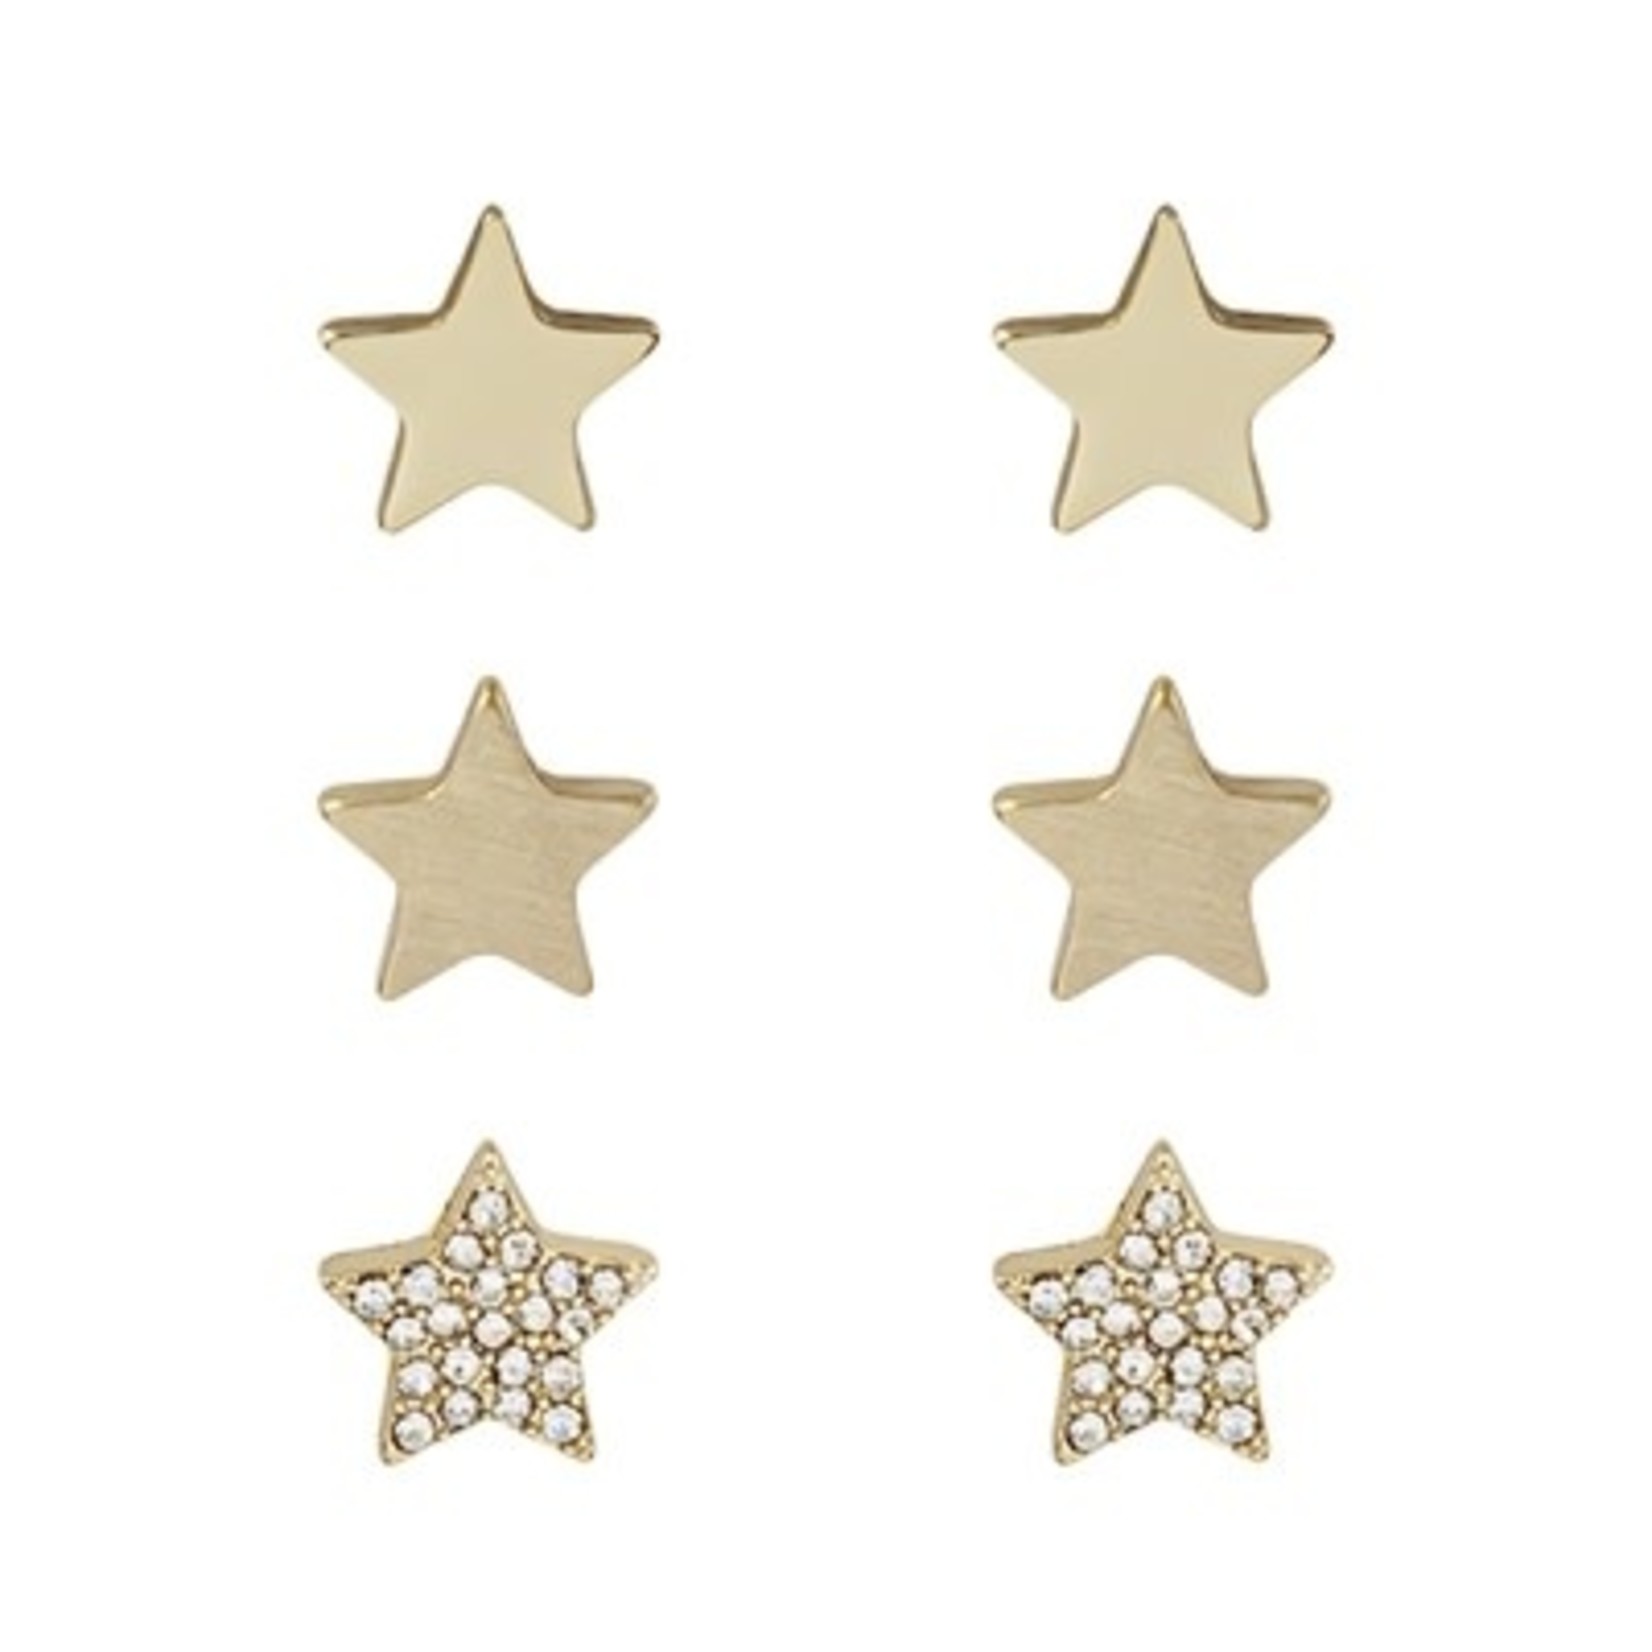 Gold Star and Rhinestone Star Set of 3 Stud Earrings